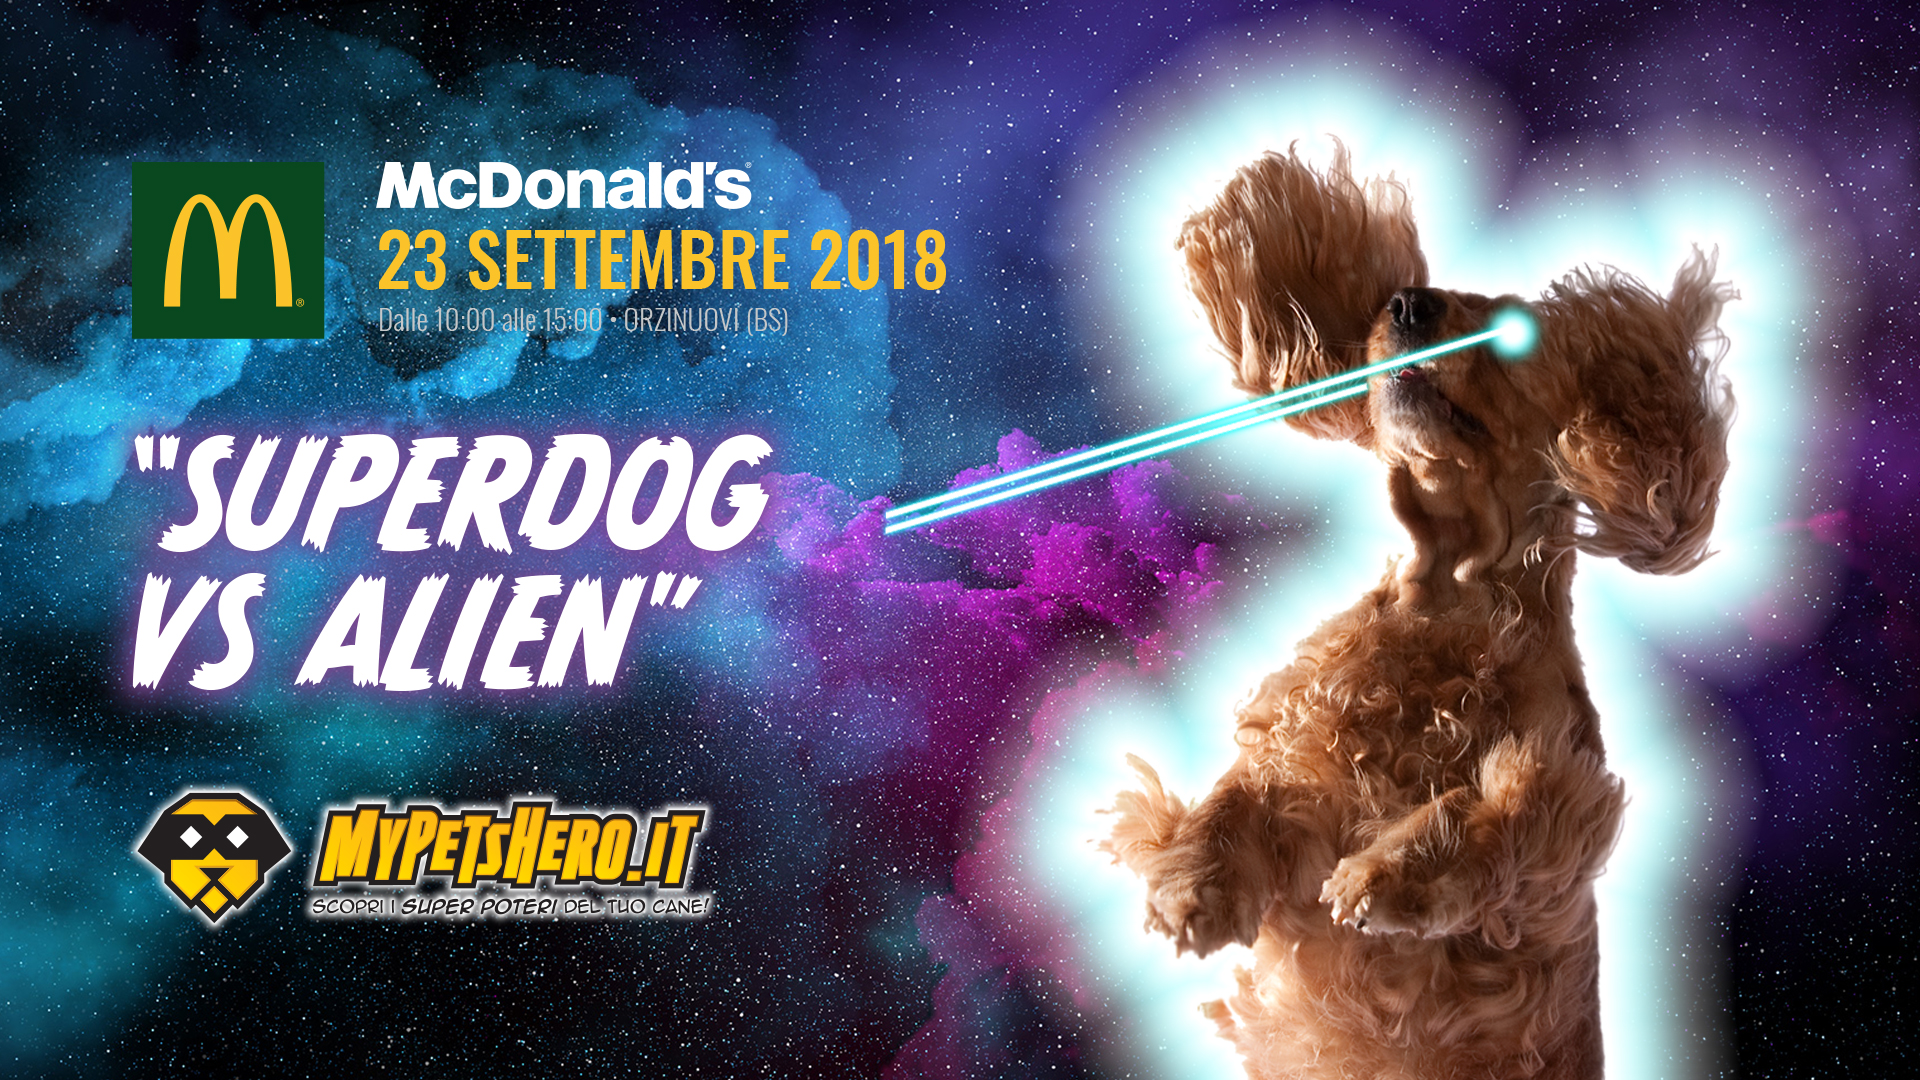 Superdog Vs Alien ed. McDonald's 2018